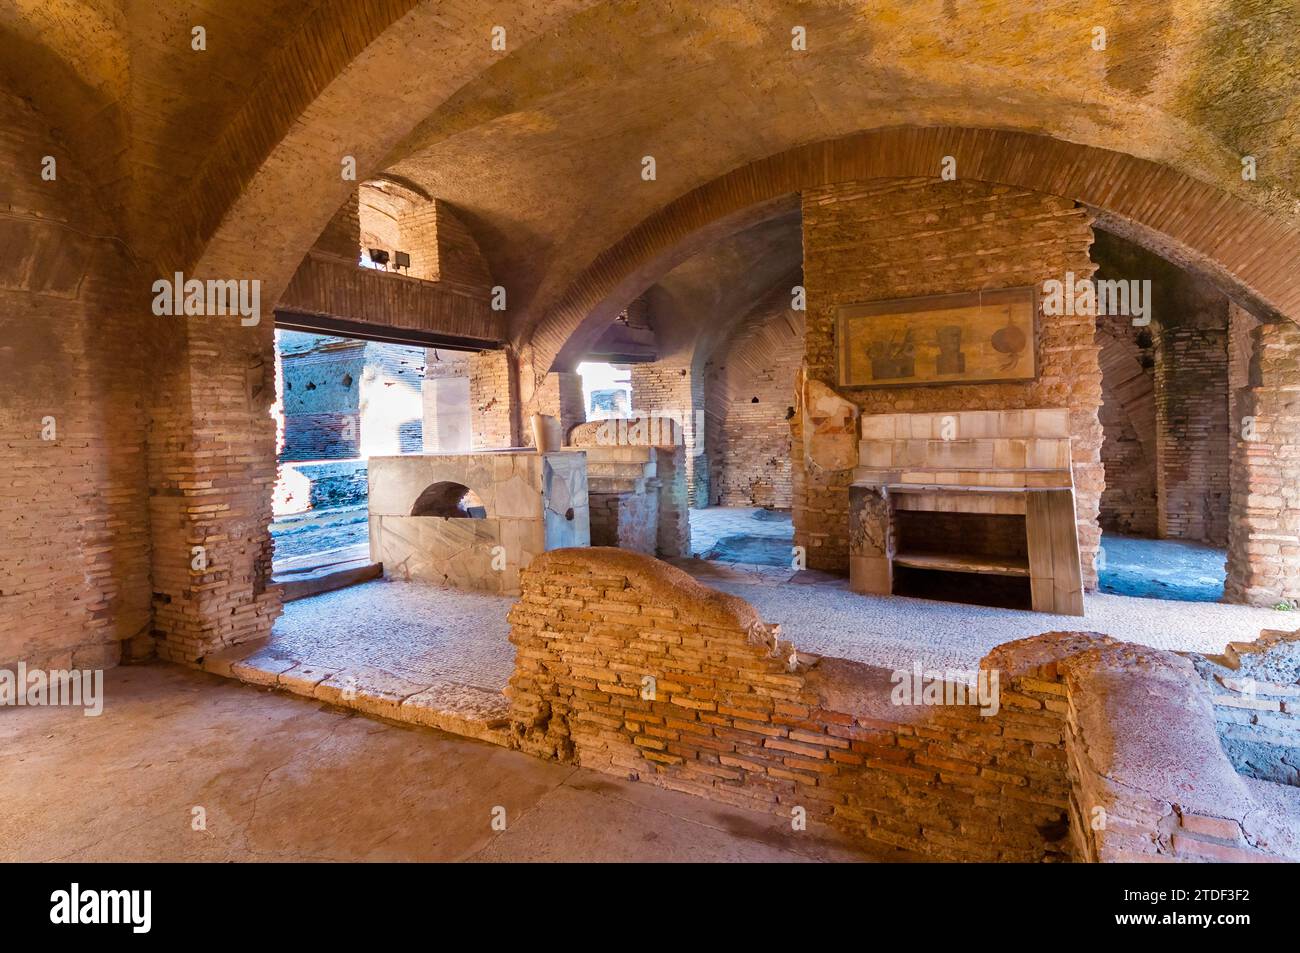 Thermopolium (Roman bar for hot food and drink), Ostia Antica archaeological site, Ostia, Rome province, Latium (Lazio), Italy, Europe Stock Photo